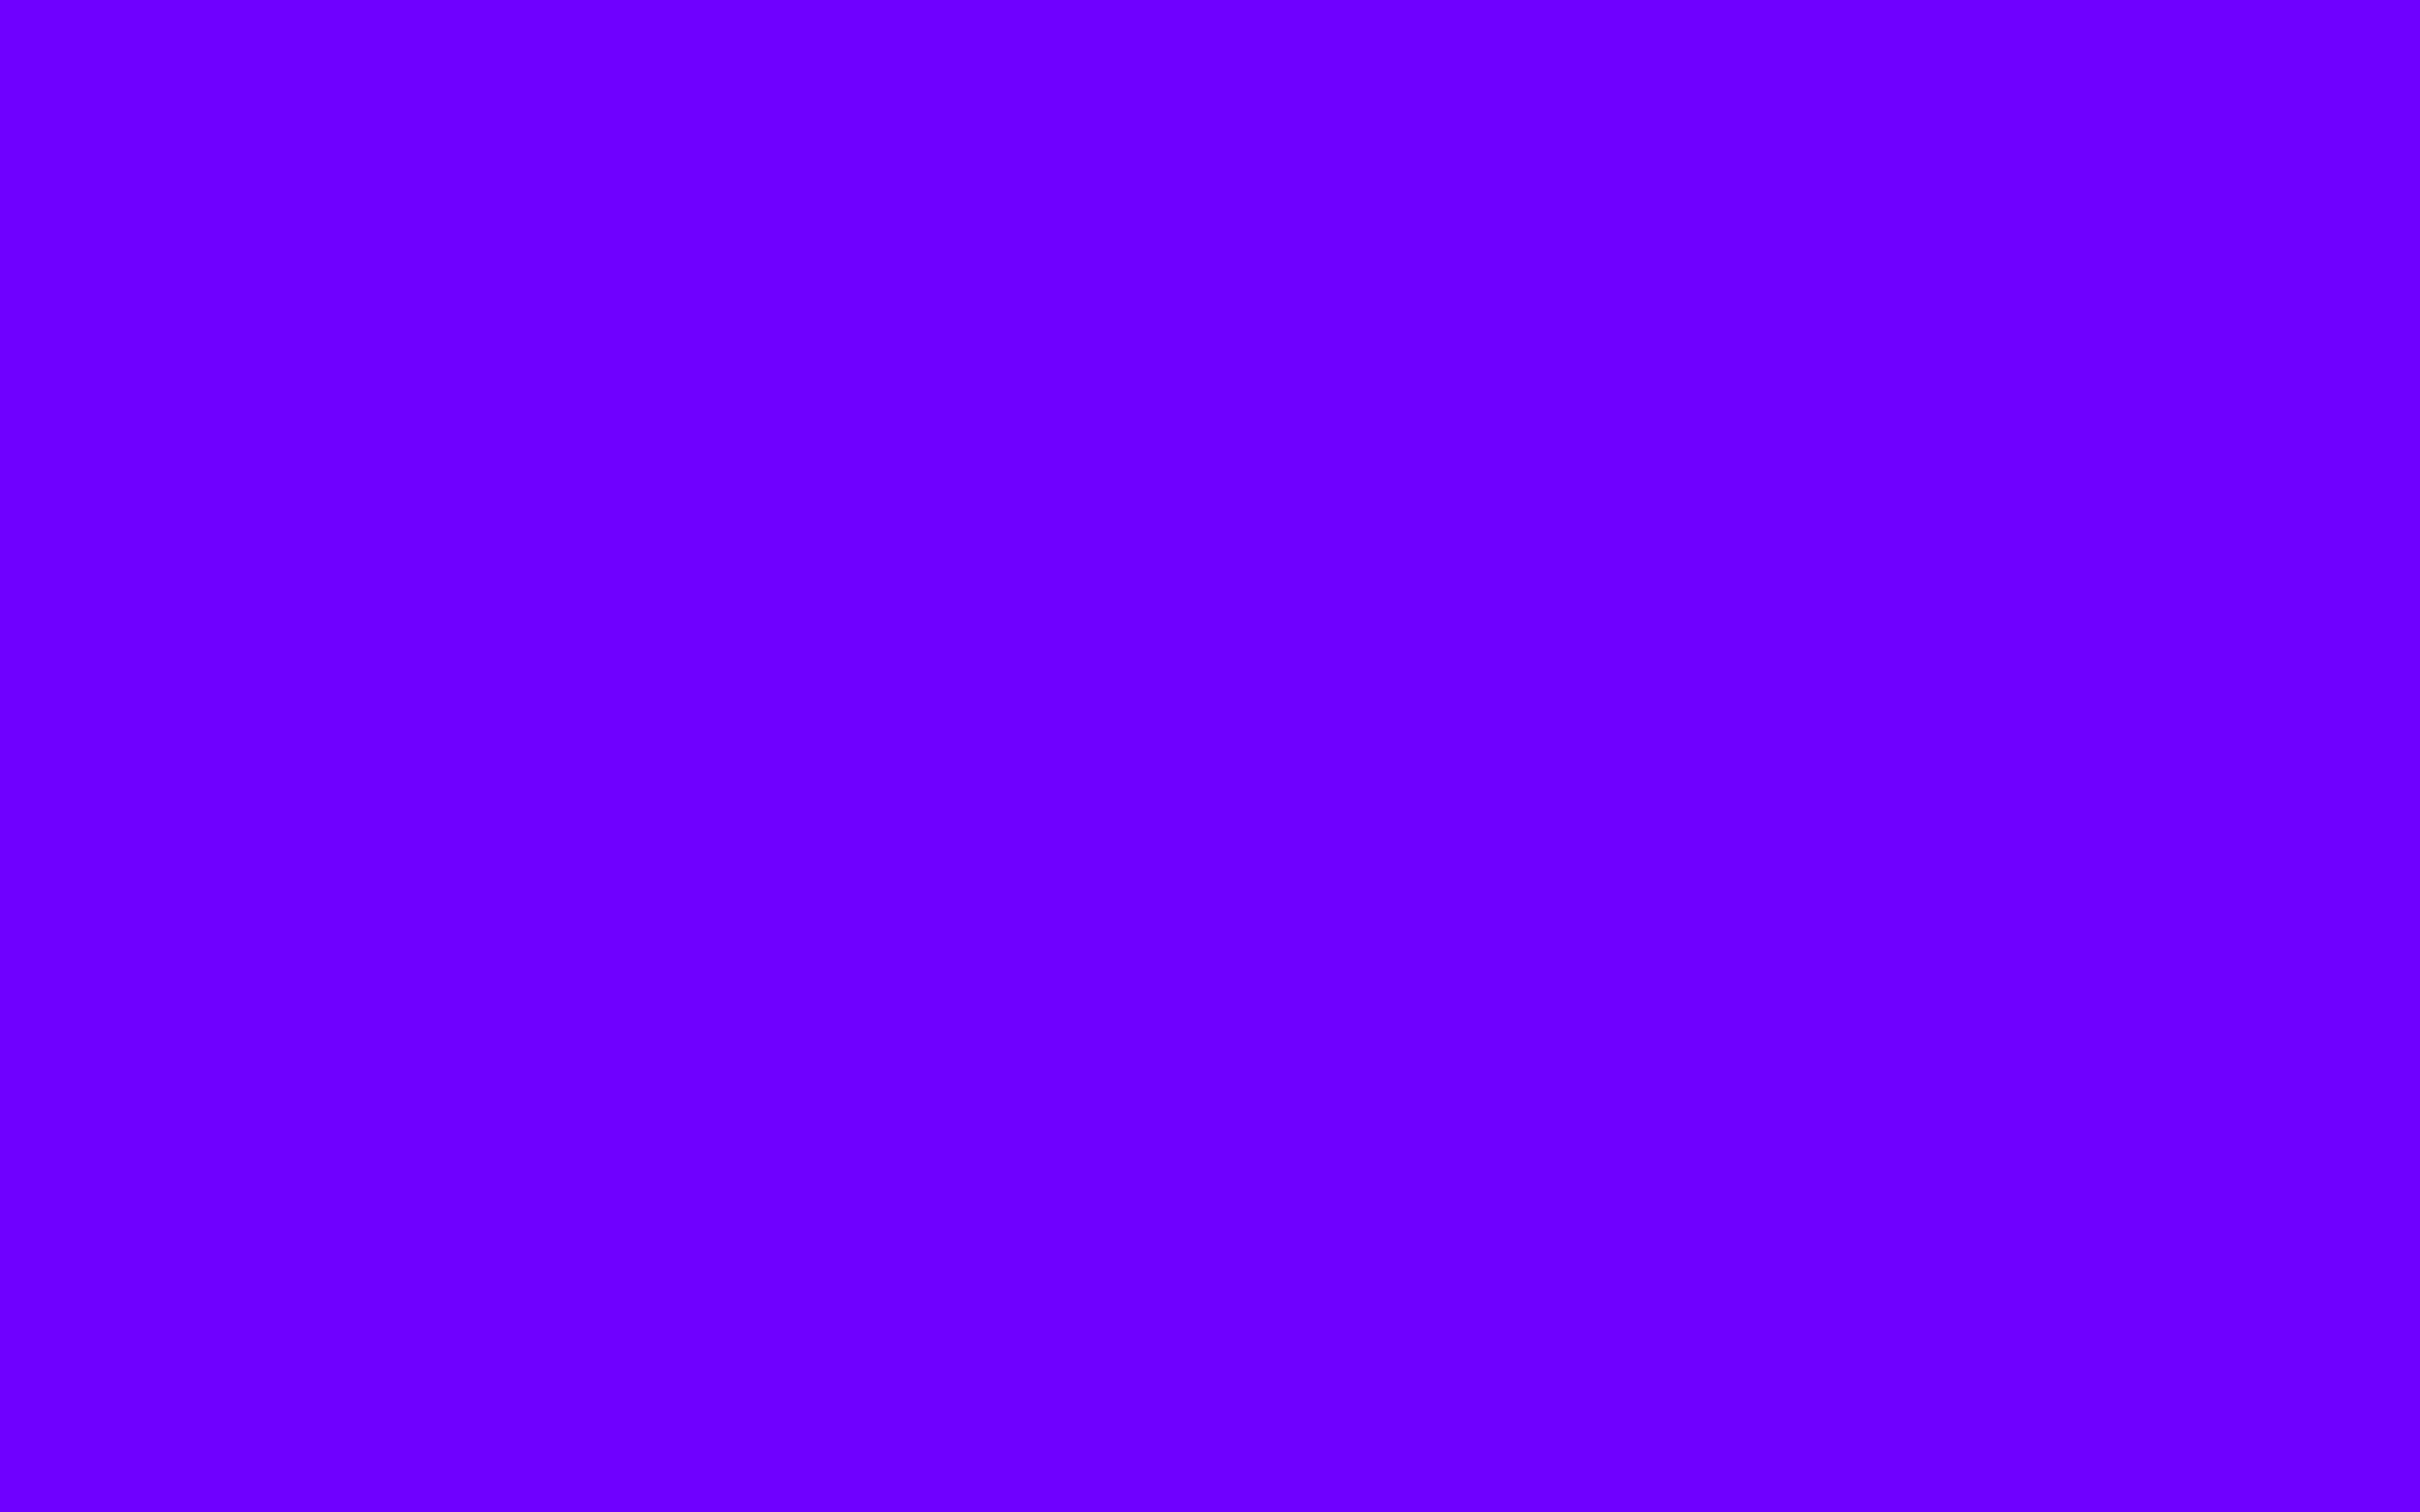 A purple image - Indigo